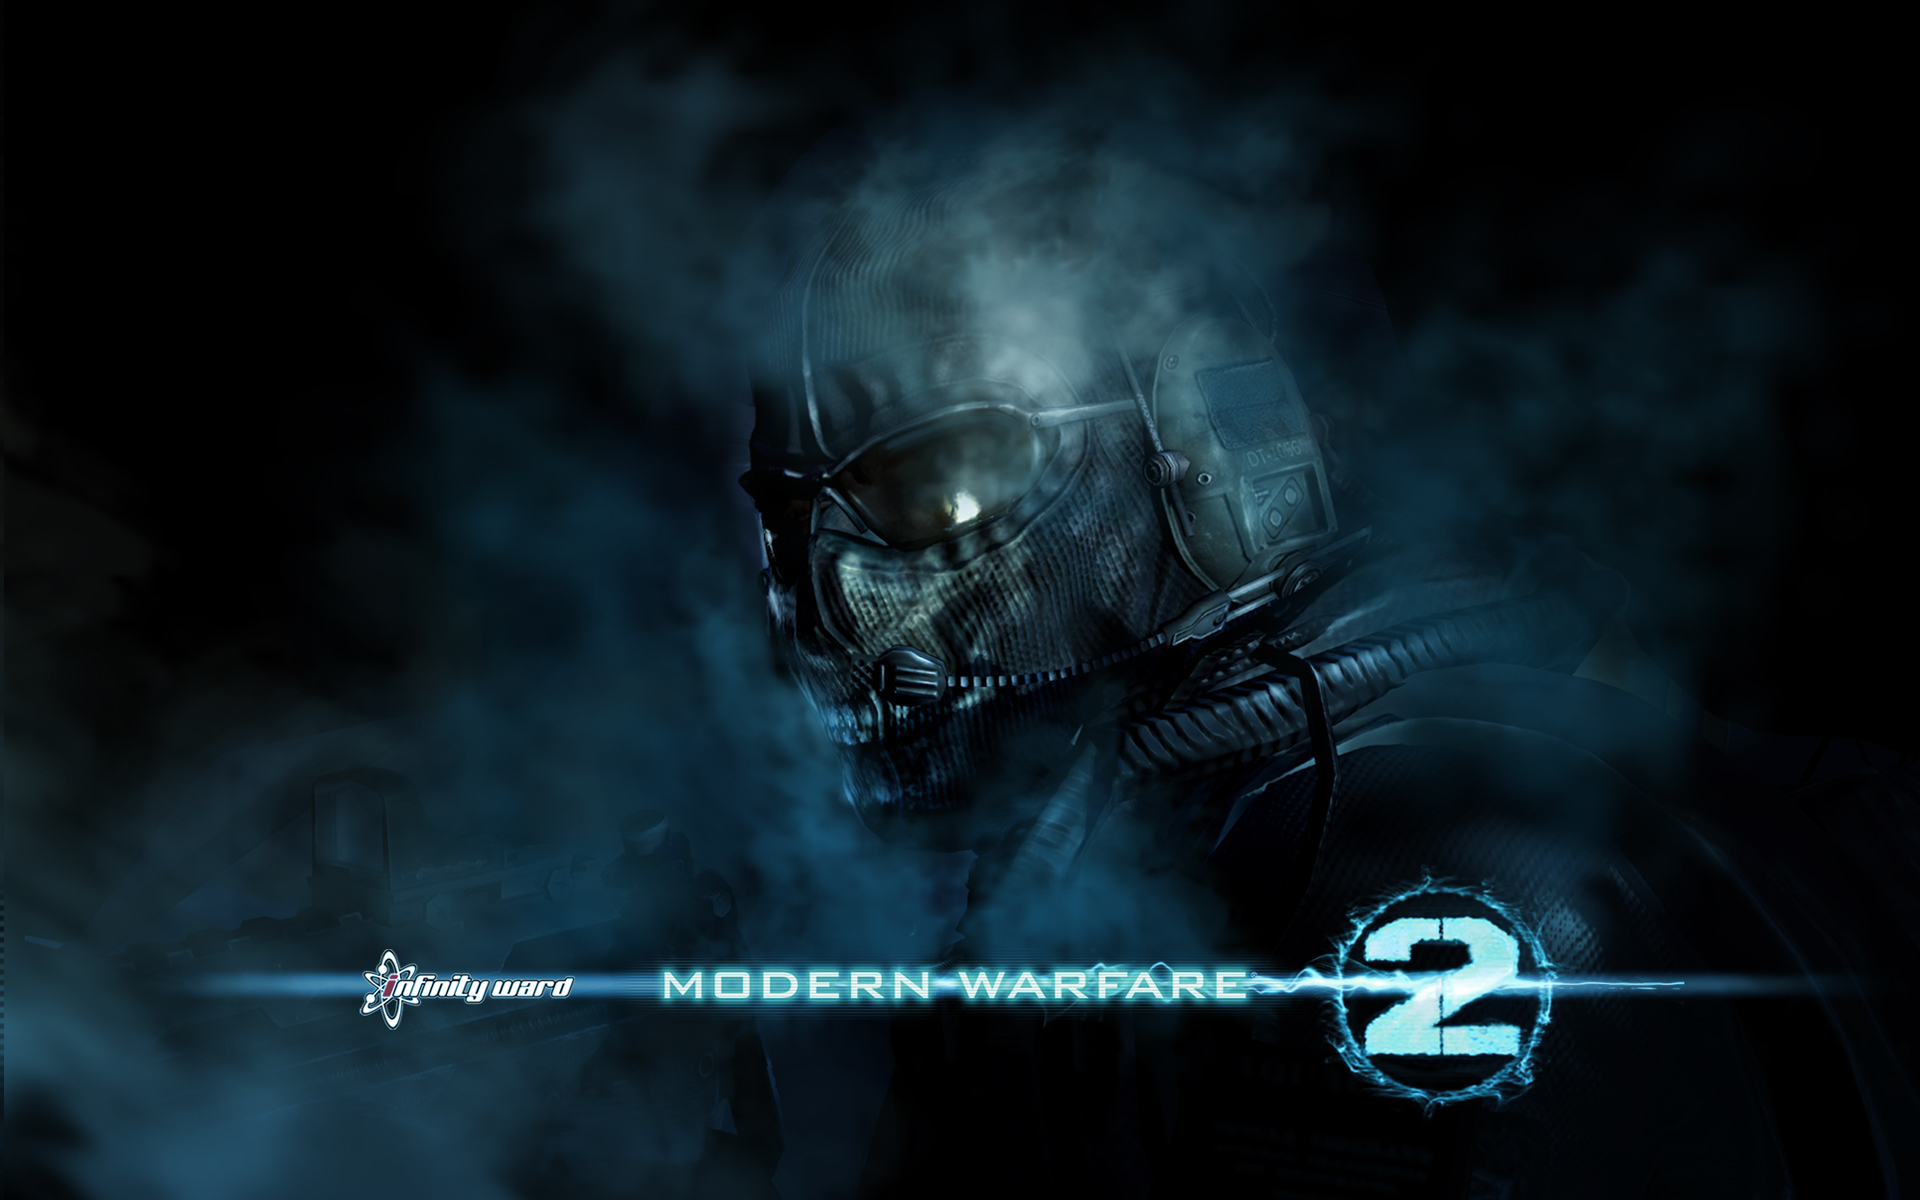 Modern Warfare Image Mw2 HD Wallpaper And Background